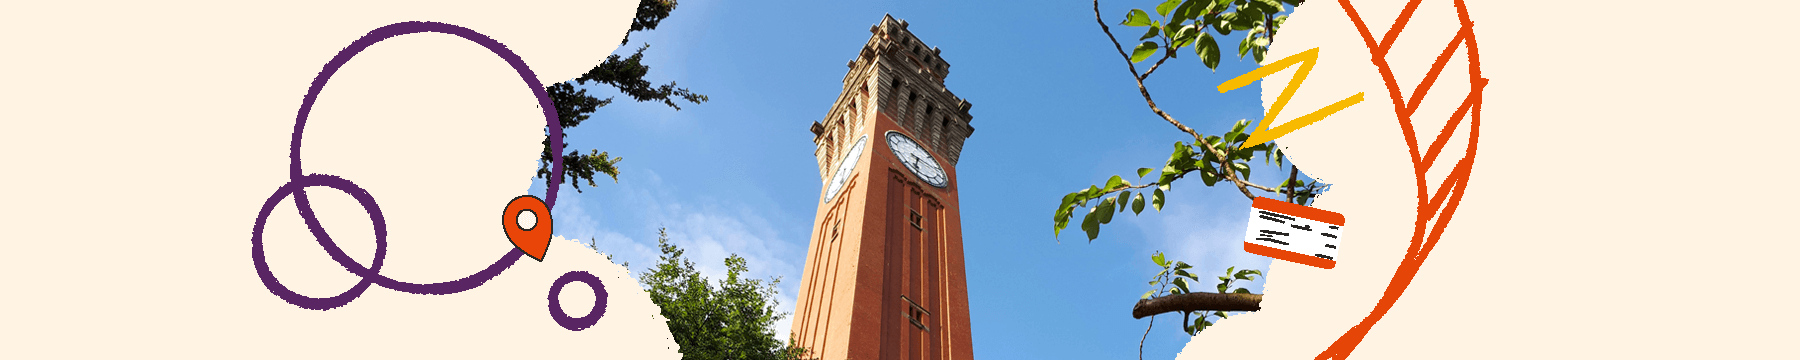 University of Birmingham Clock Tower